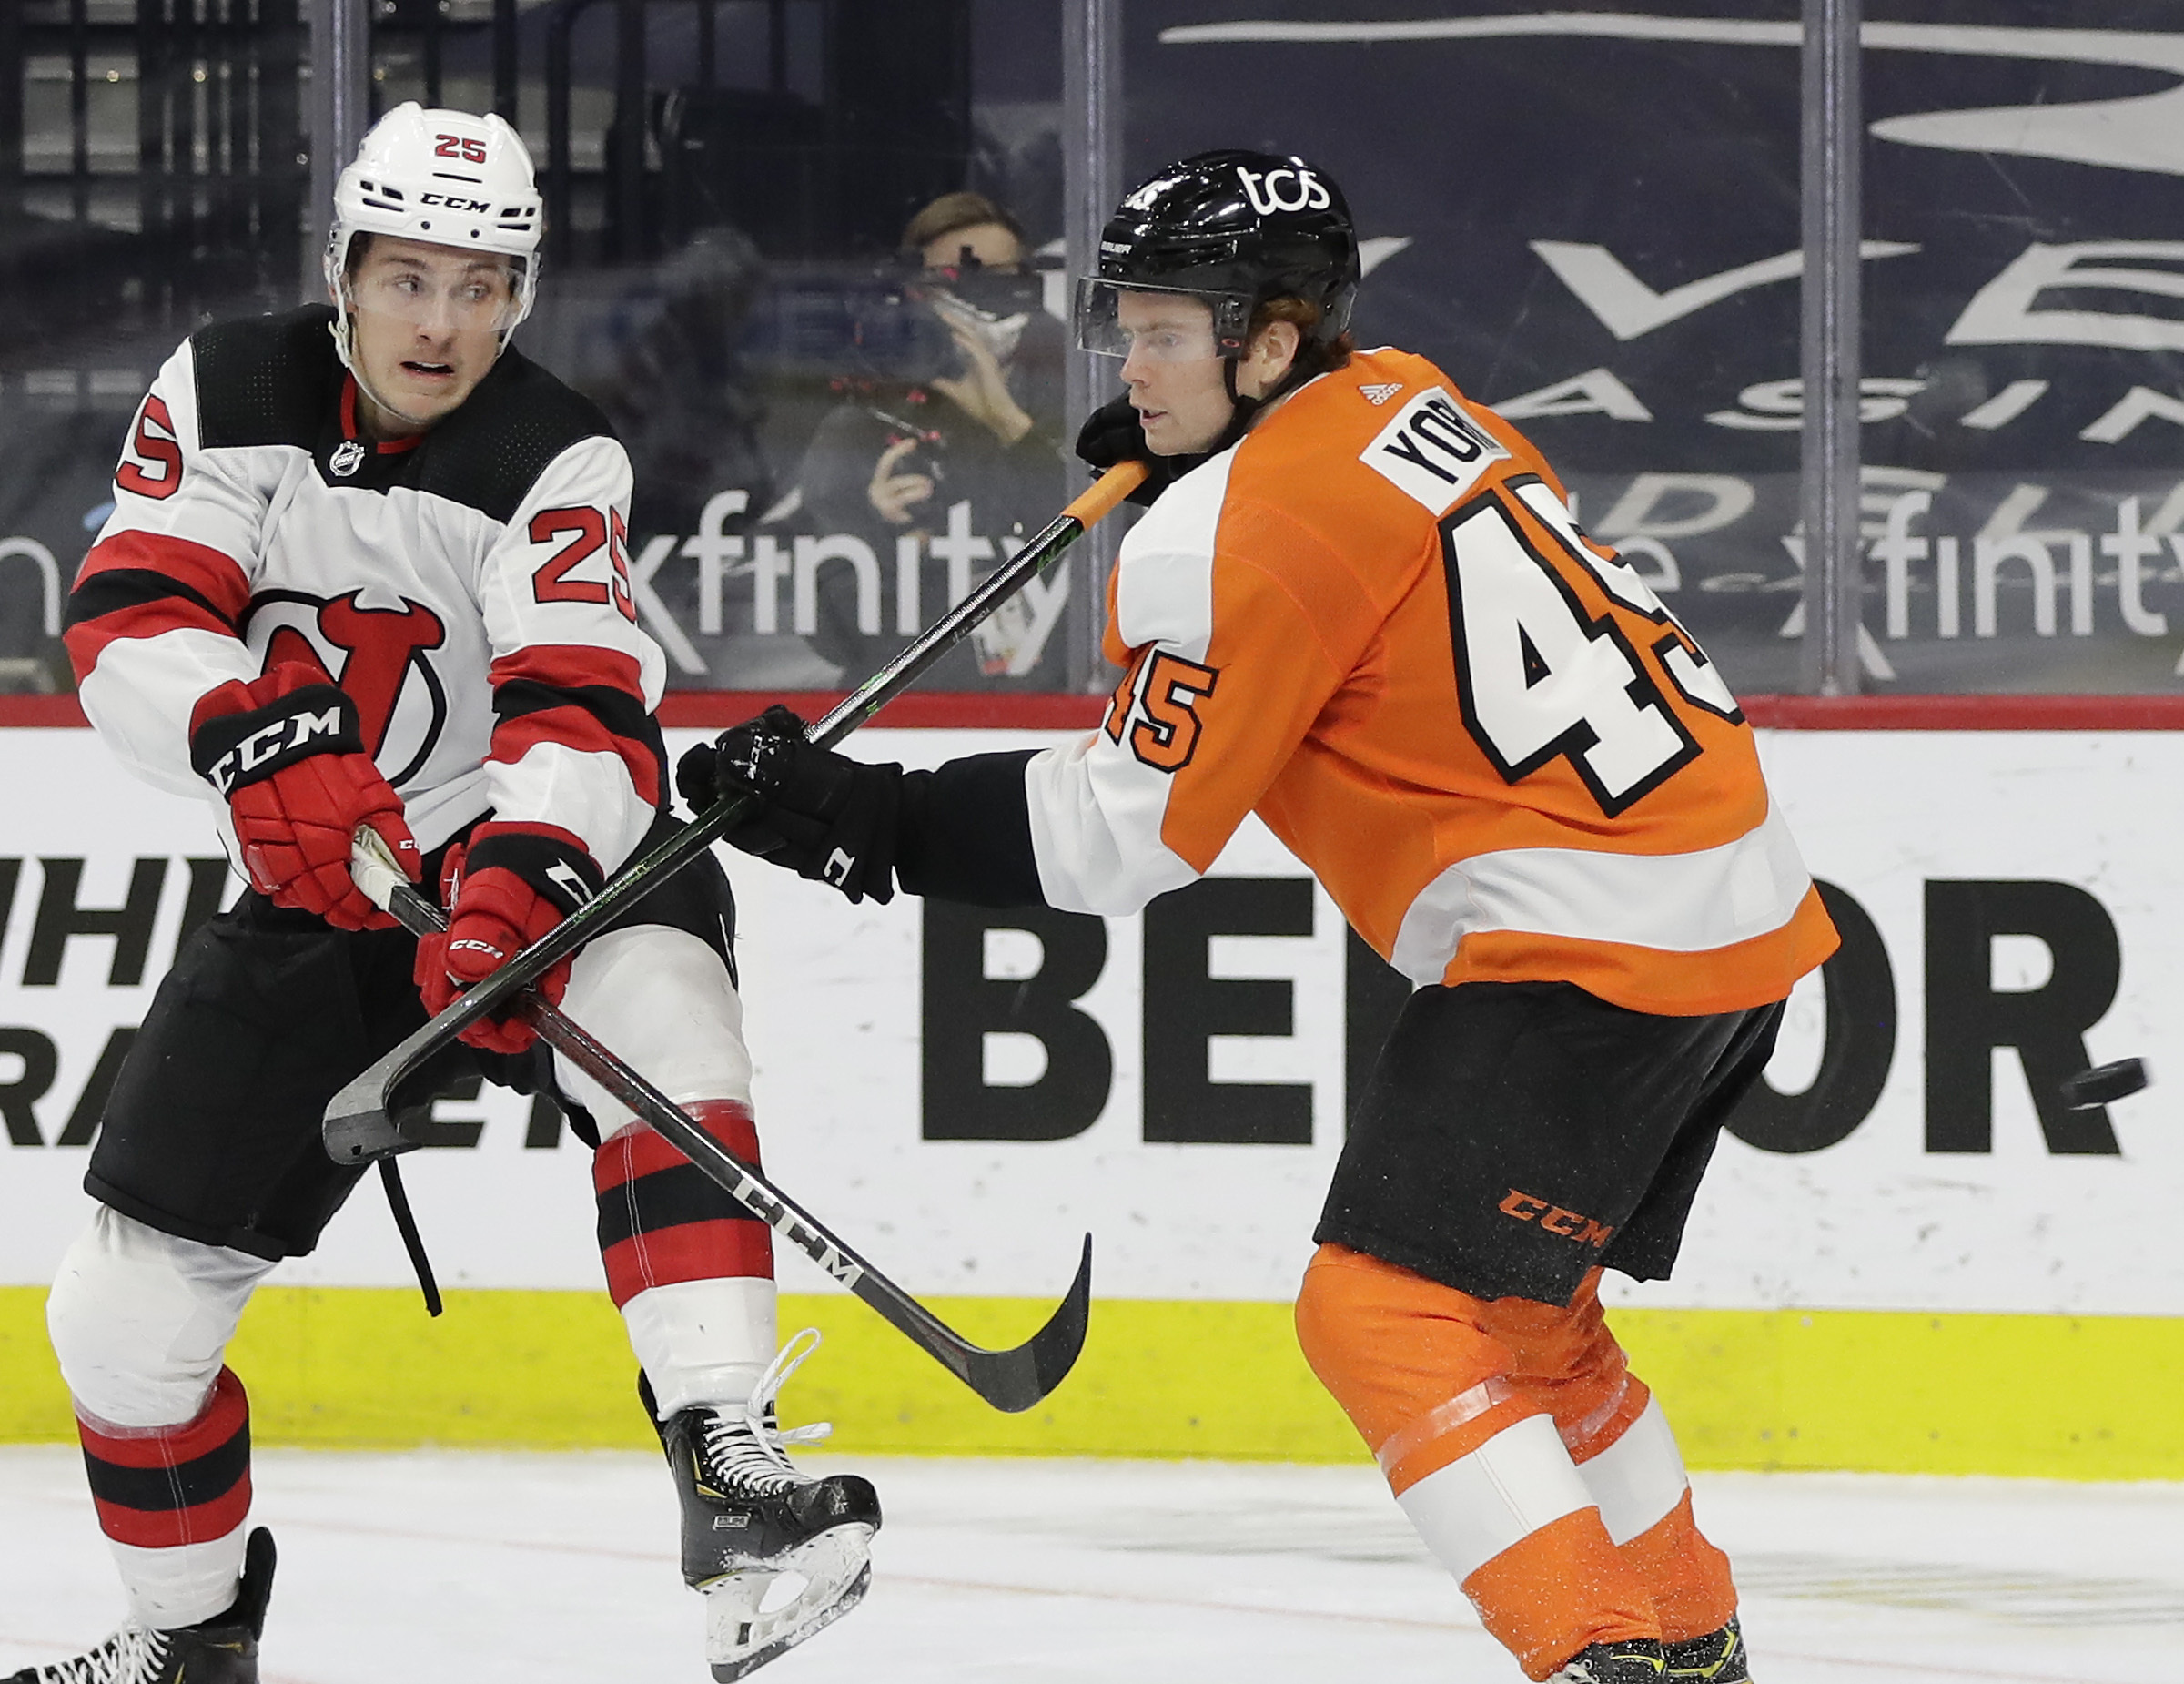 Philadelphia Flyers vs. New Jersey Devils (2/25/23) - Stream the